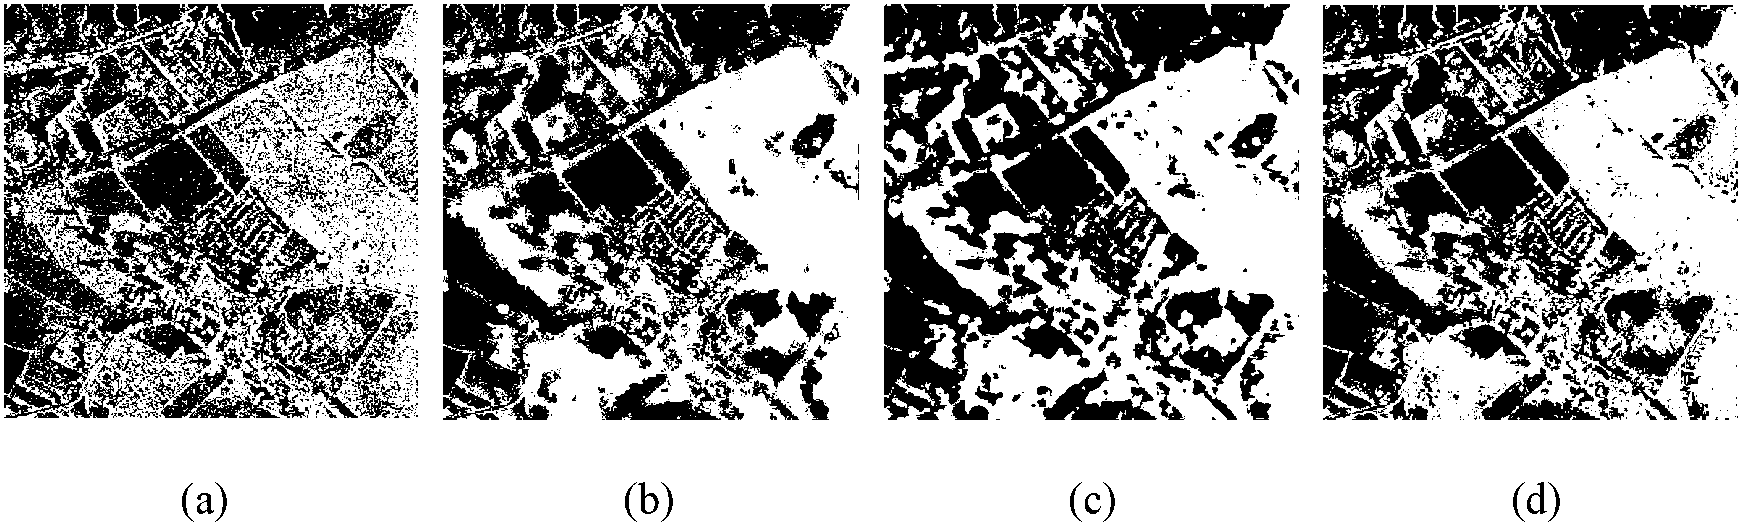 Beta algorithm-based multiscale SAR (Synthetic Aperture Radar) image denoising method